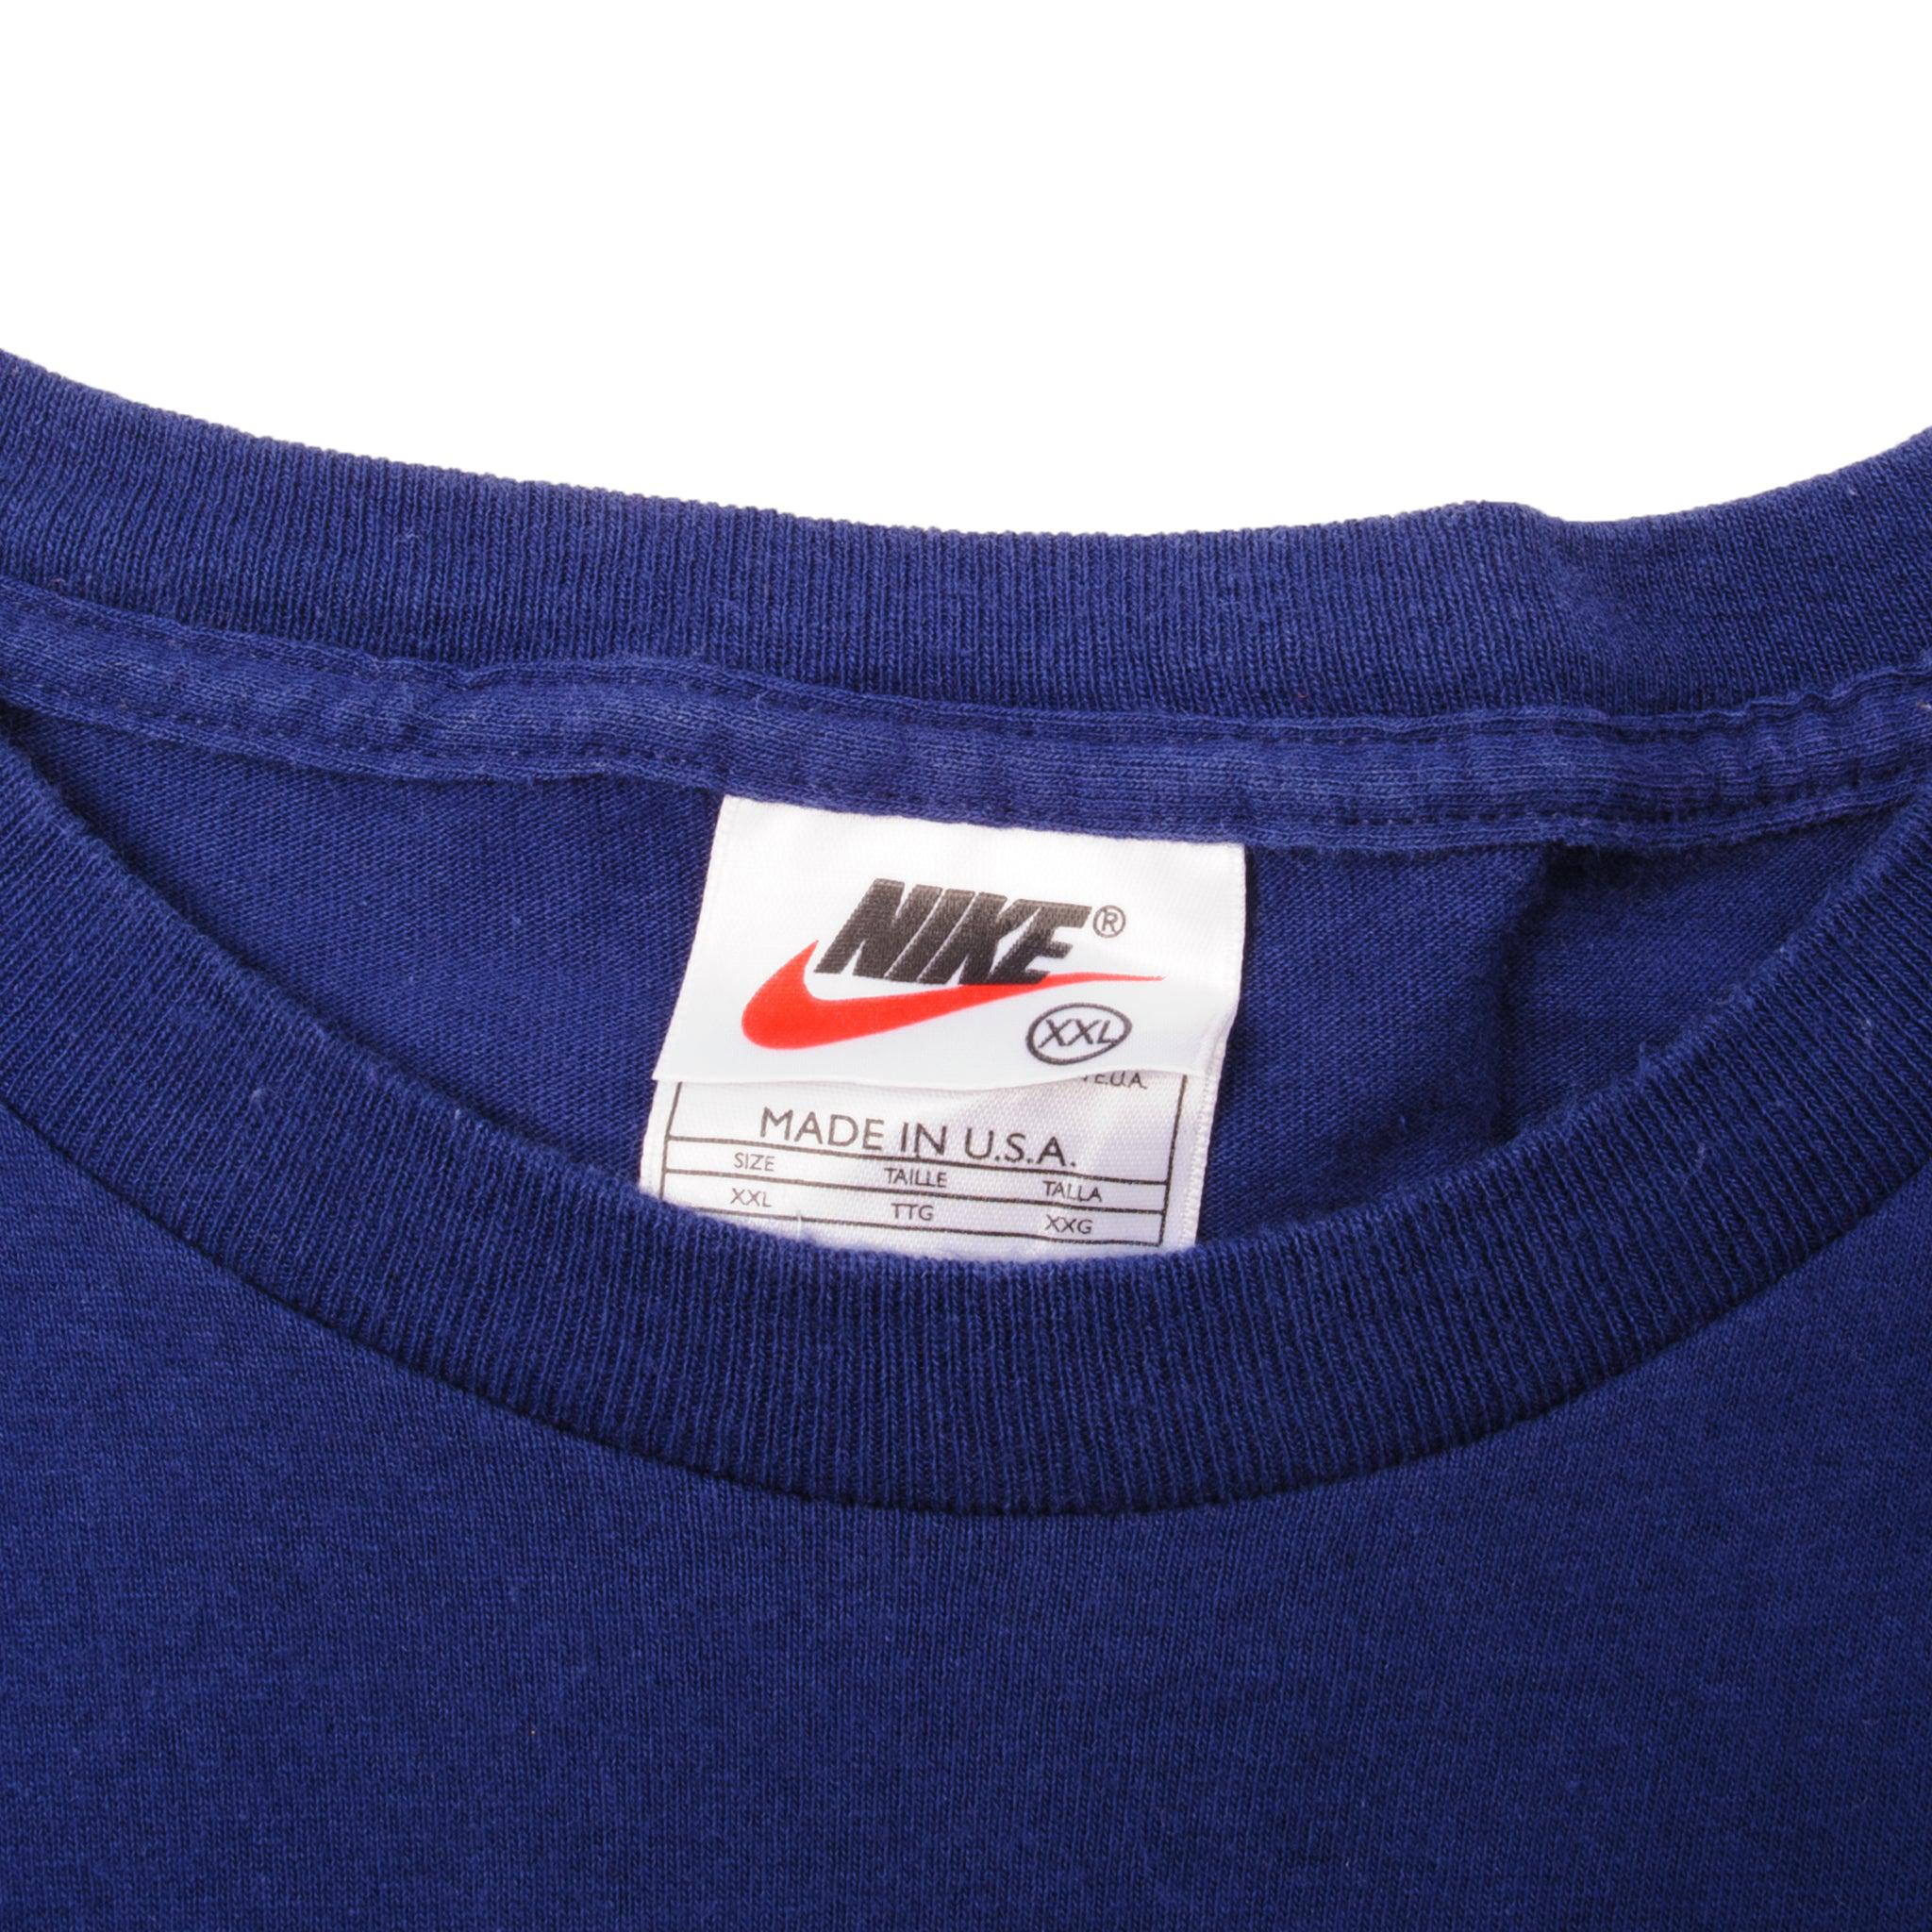 Vintage Nike Mid-Swoosh Houston Rockets T-Shirt - Large — TopBoy